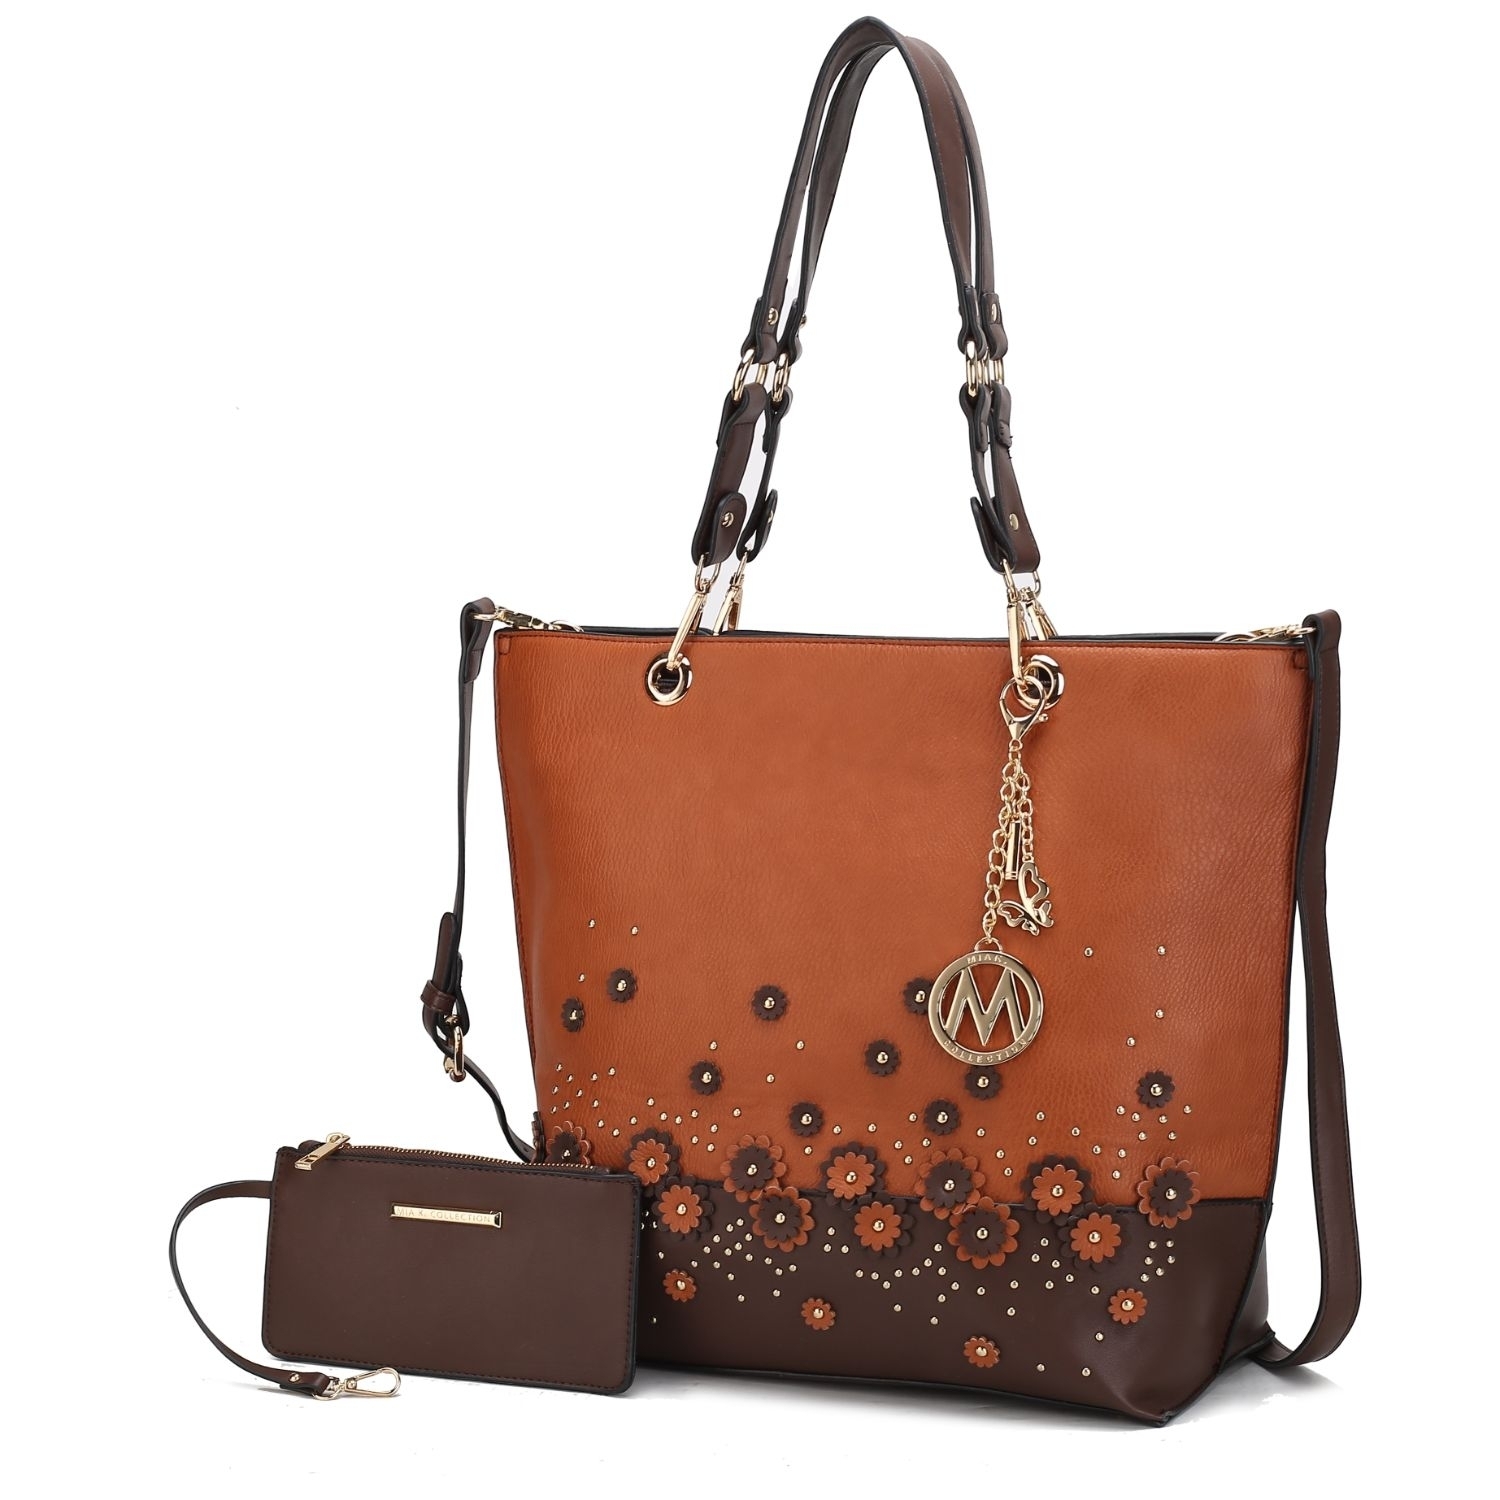 MKF Collection Petra Tote Handbag With Wristlet By Mia K.- 2 Pieces - Chocolate